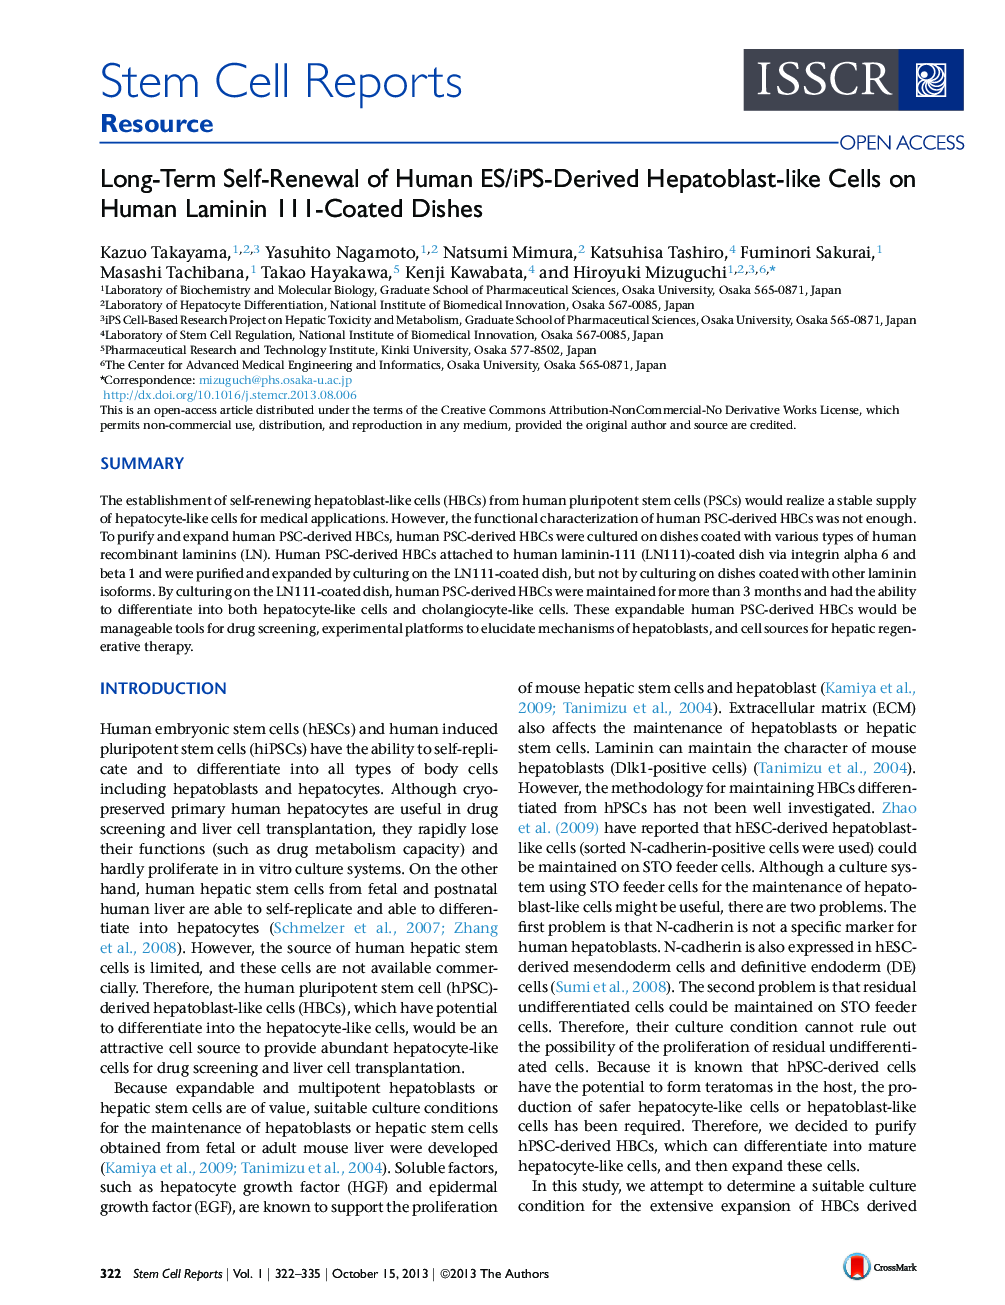 Long-Term Self-Renewal of Human ES/iPS-Derived Hepatoblast-like Cells on Human Laminin 111-Coated Dishes 